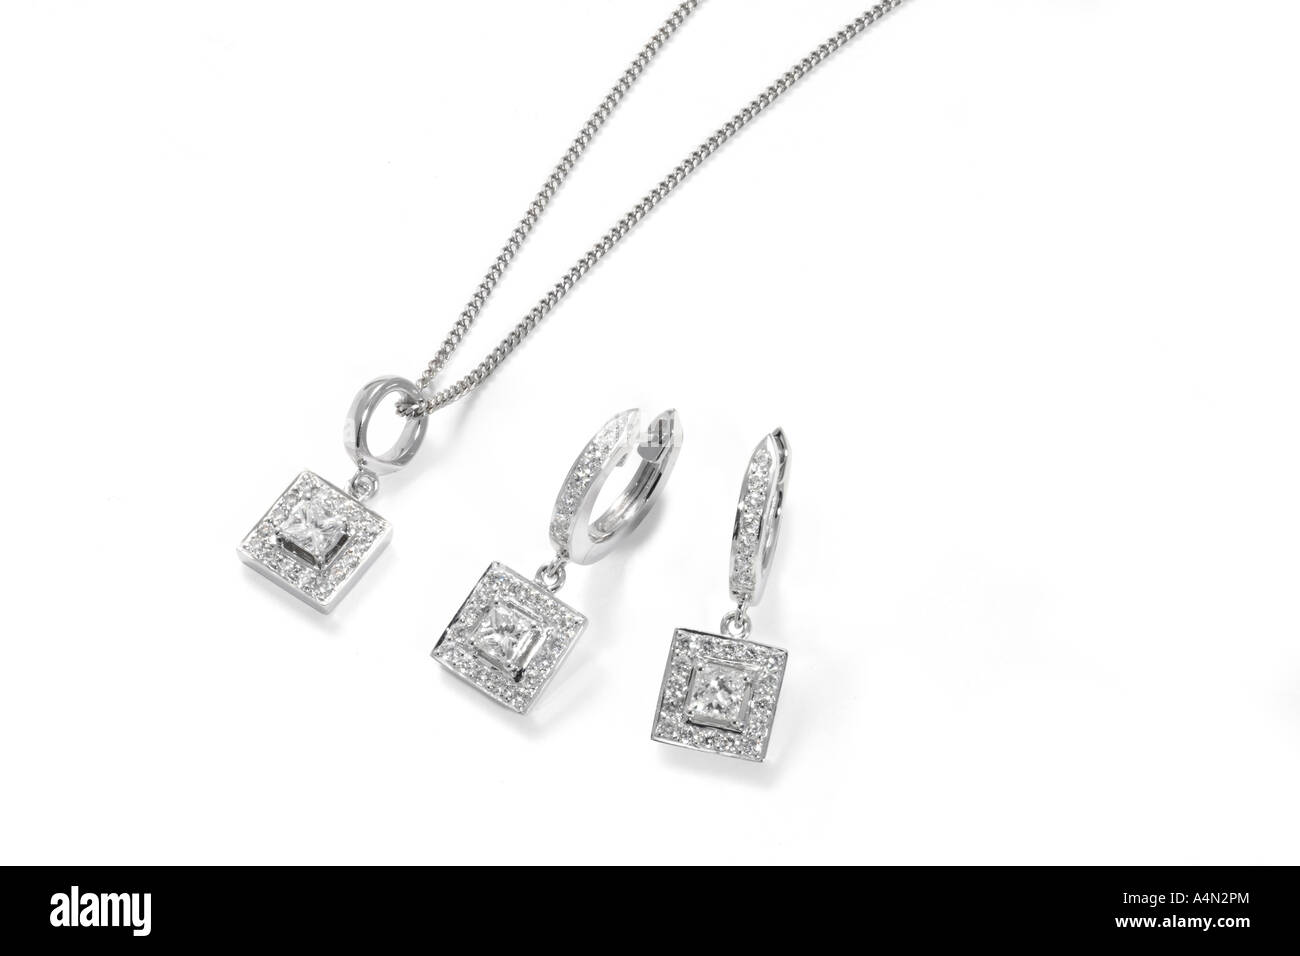 Diamond earrings and pendant Stock Photo